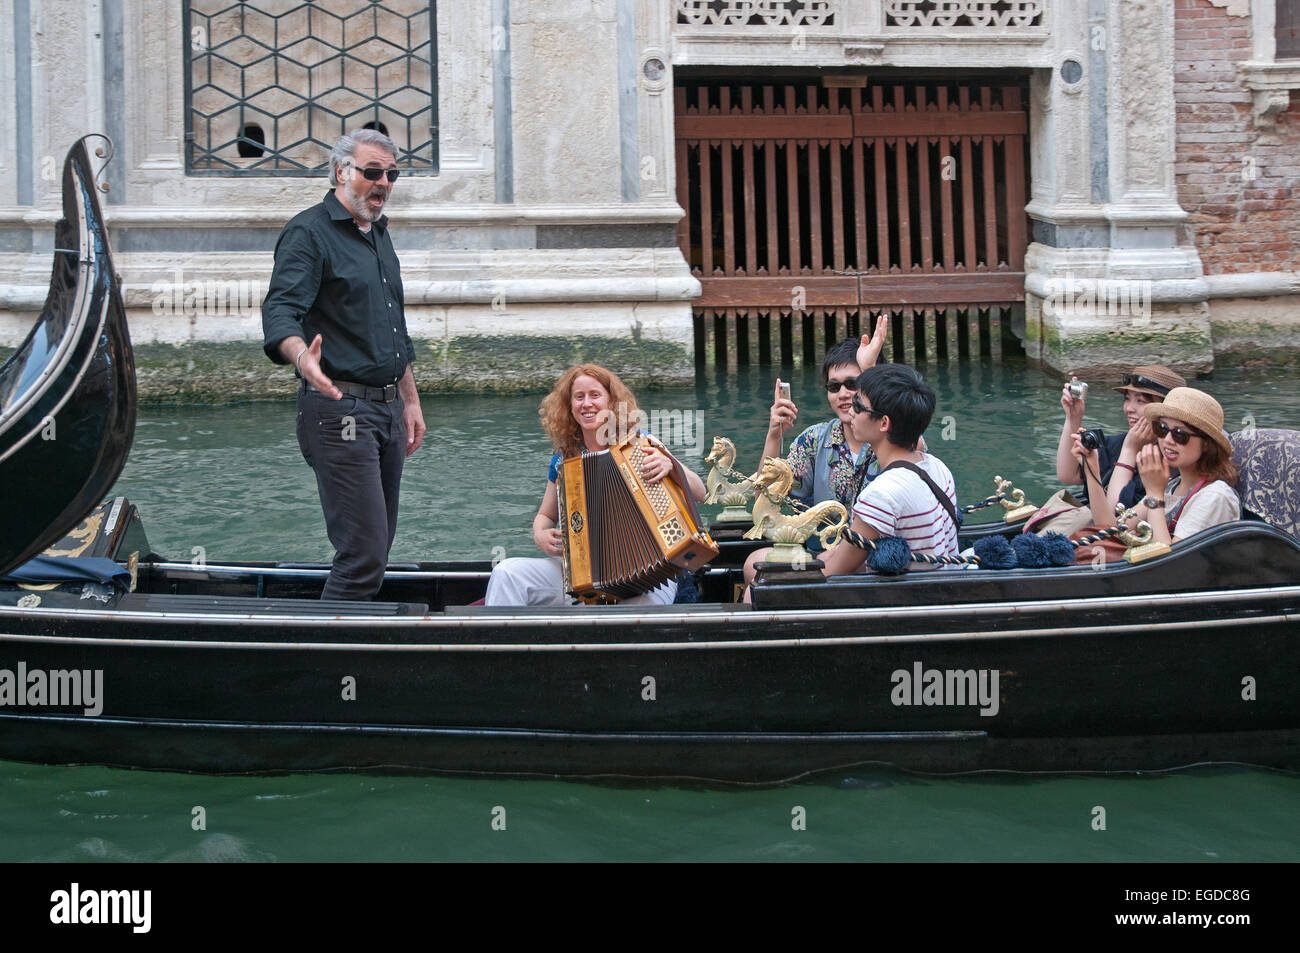 Male opera singer entertains family on godola going on Rio de Palazzo de Canonica Venice Italy near Bridge of Sighs Stock Photo